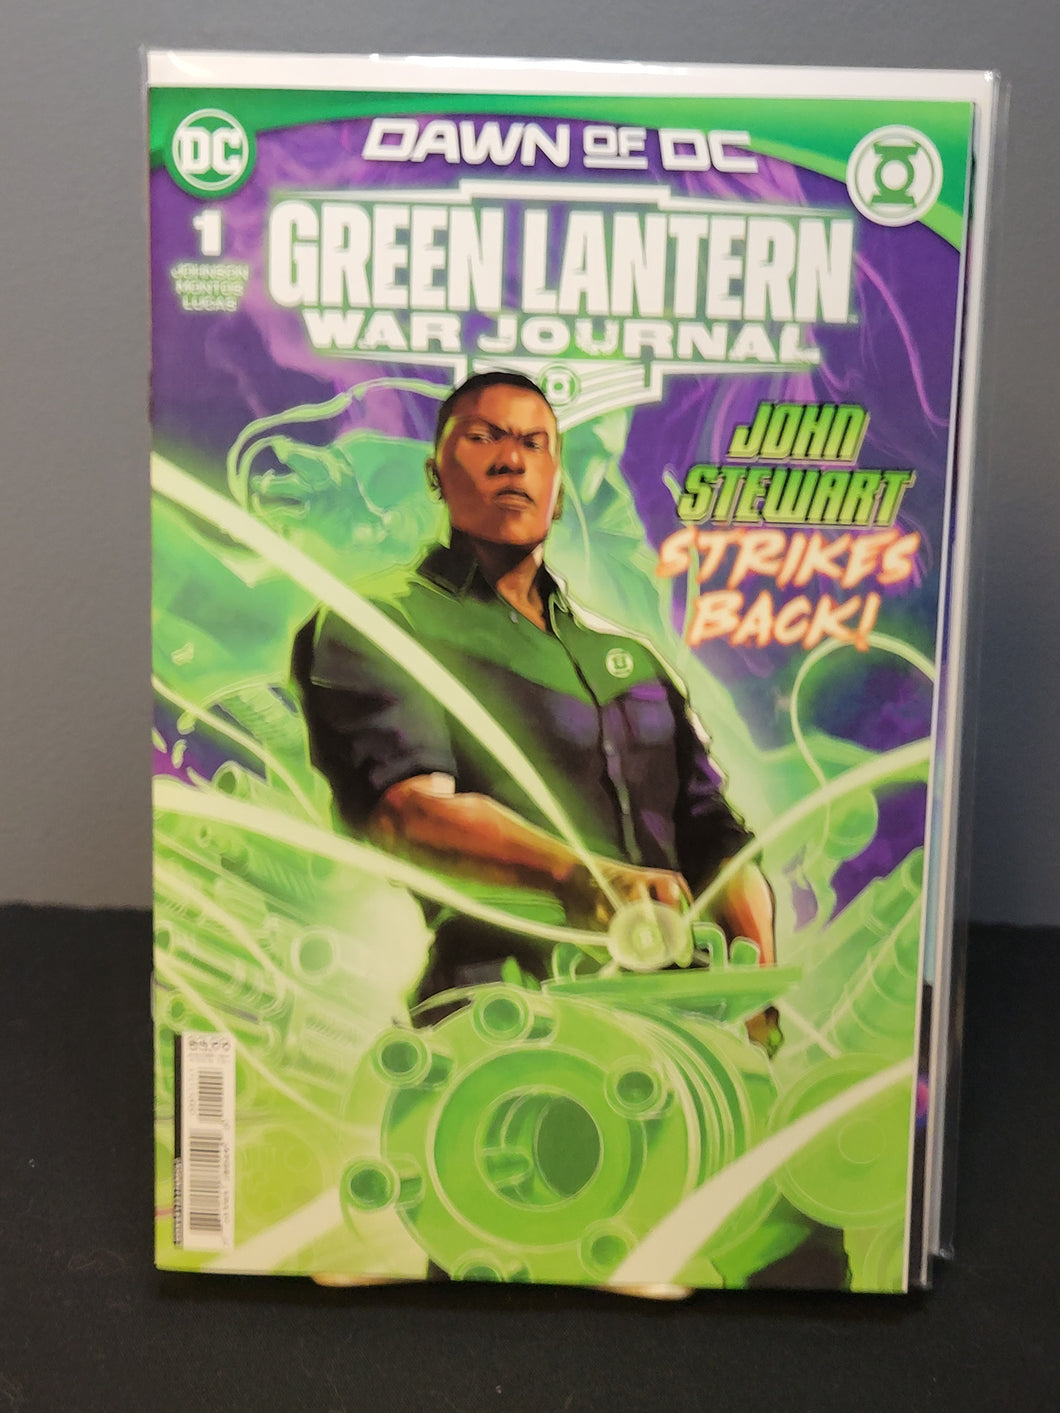 Green Lantern War Journal #1